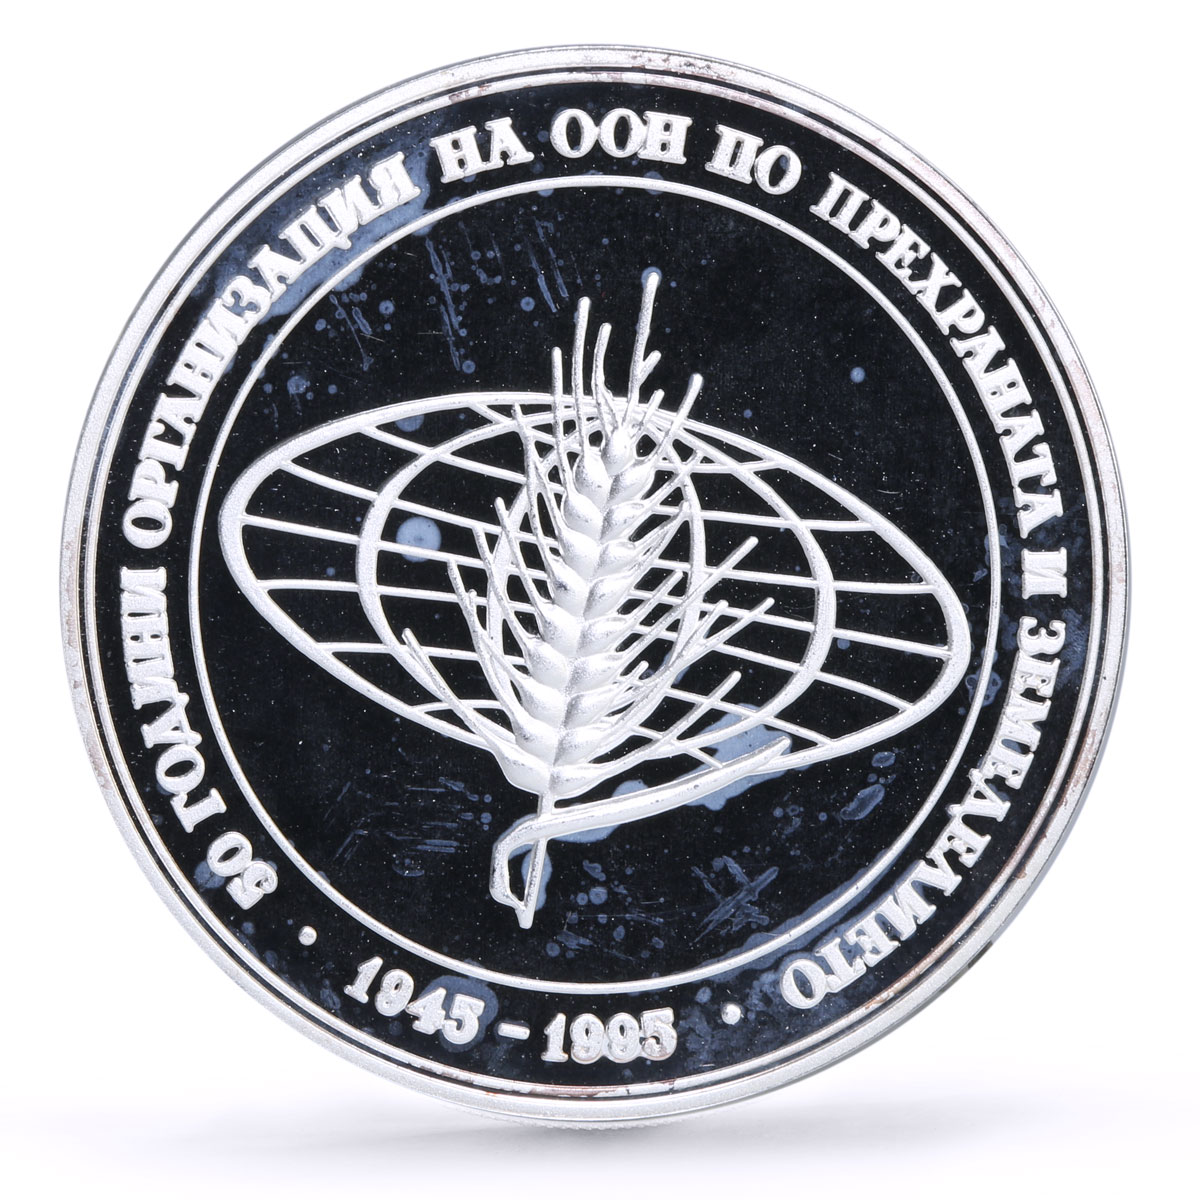 Bulgaria 1000 leva FAO World Food Day 50th Anniversary proof silver coin 1995